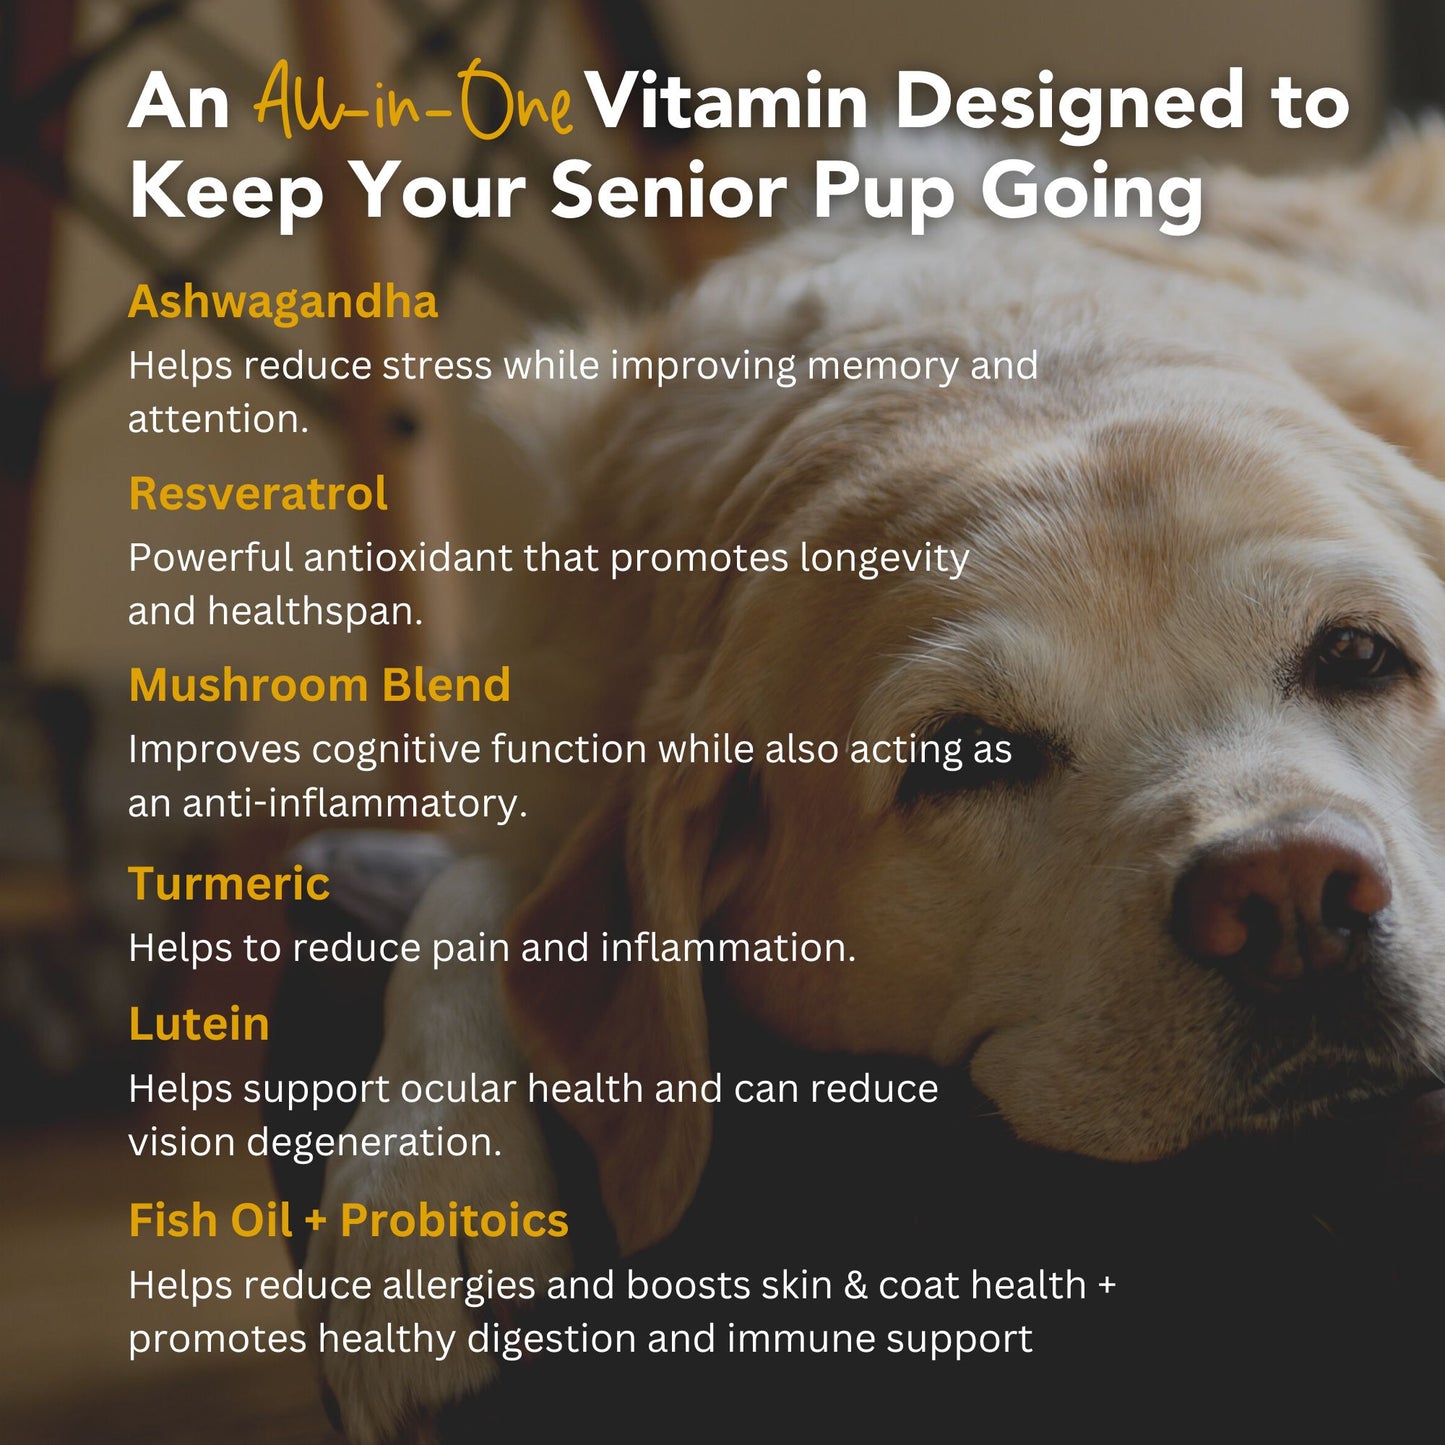 iHeartDogs Senior Super 7 Daily MegaVitamin For Dogs 7-In-1 Antioxidant Anti-Aging Support - 60 Chews